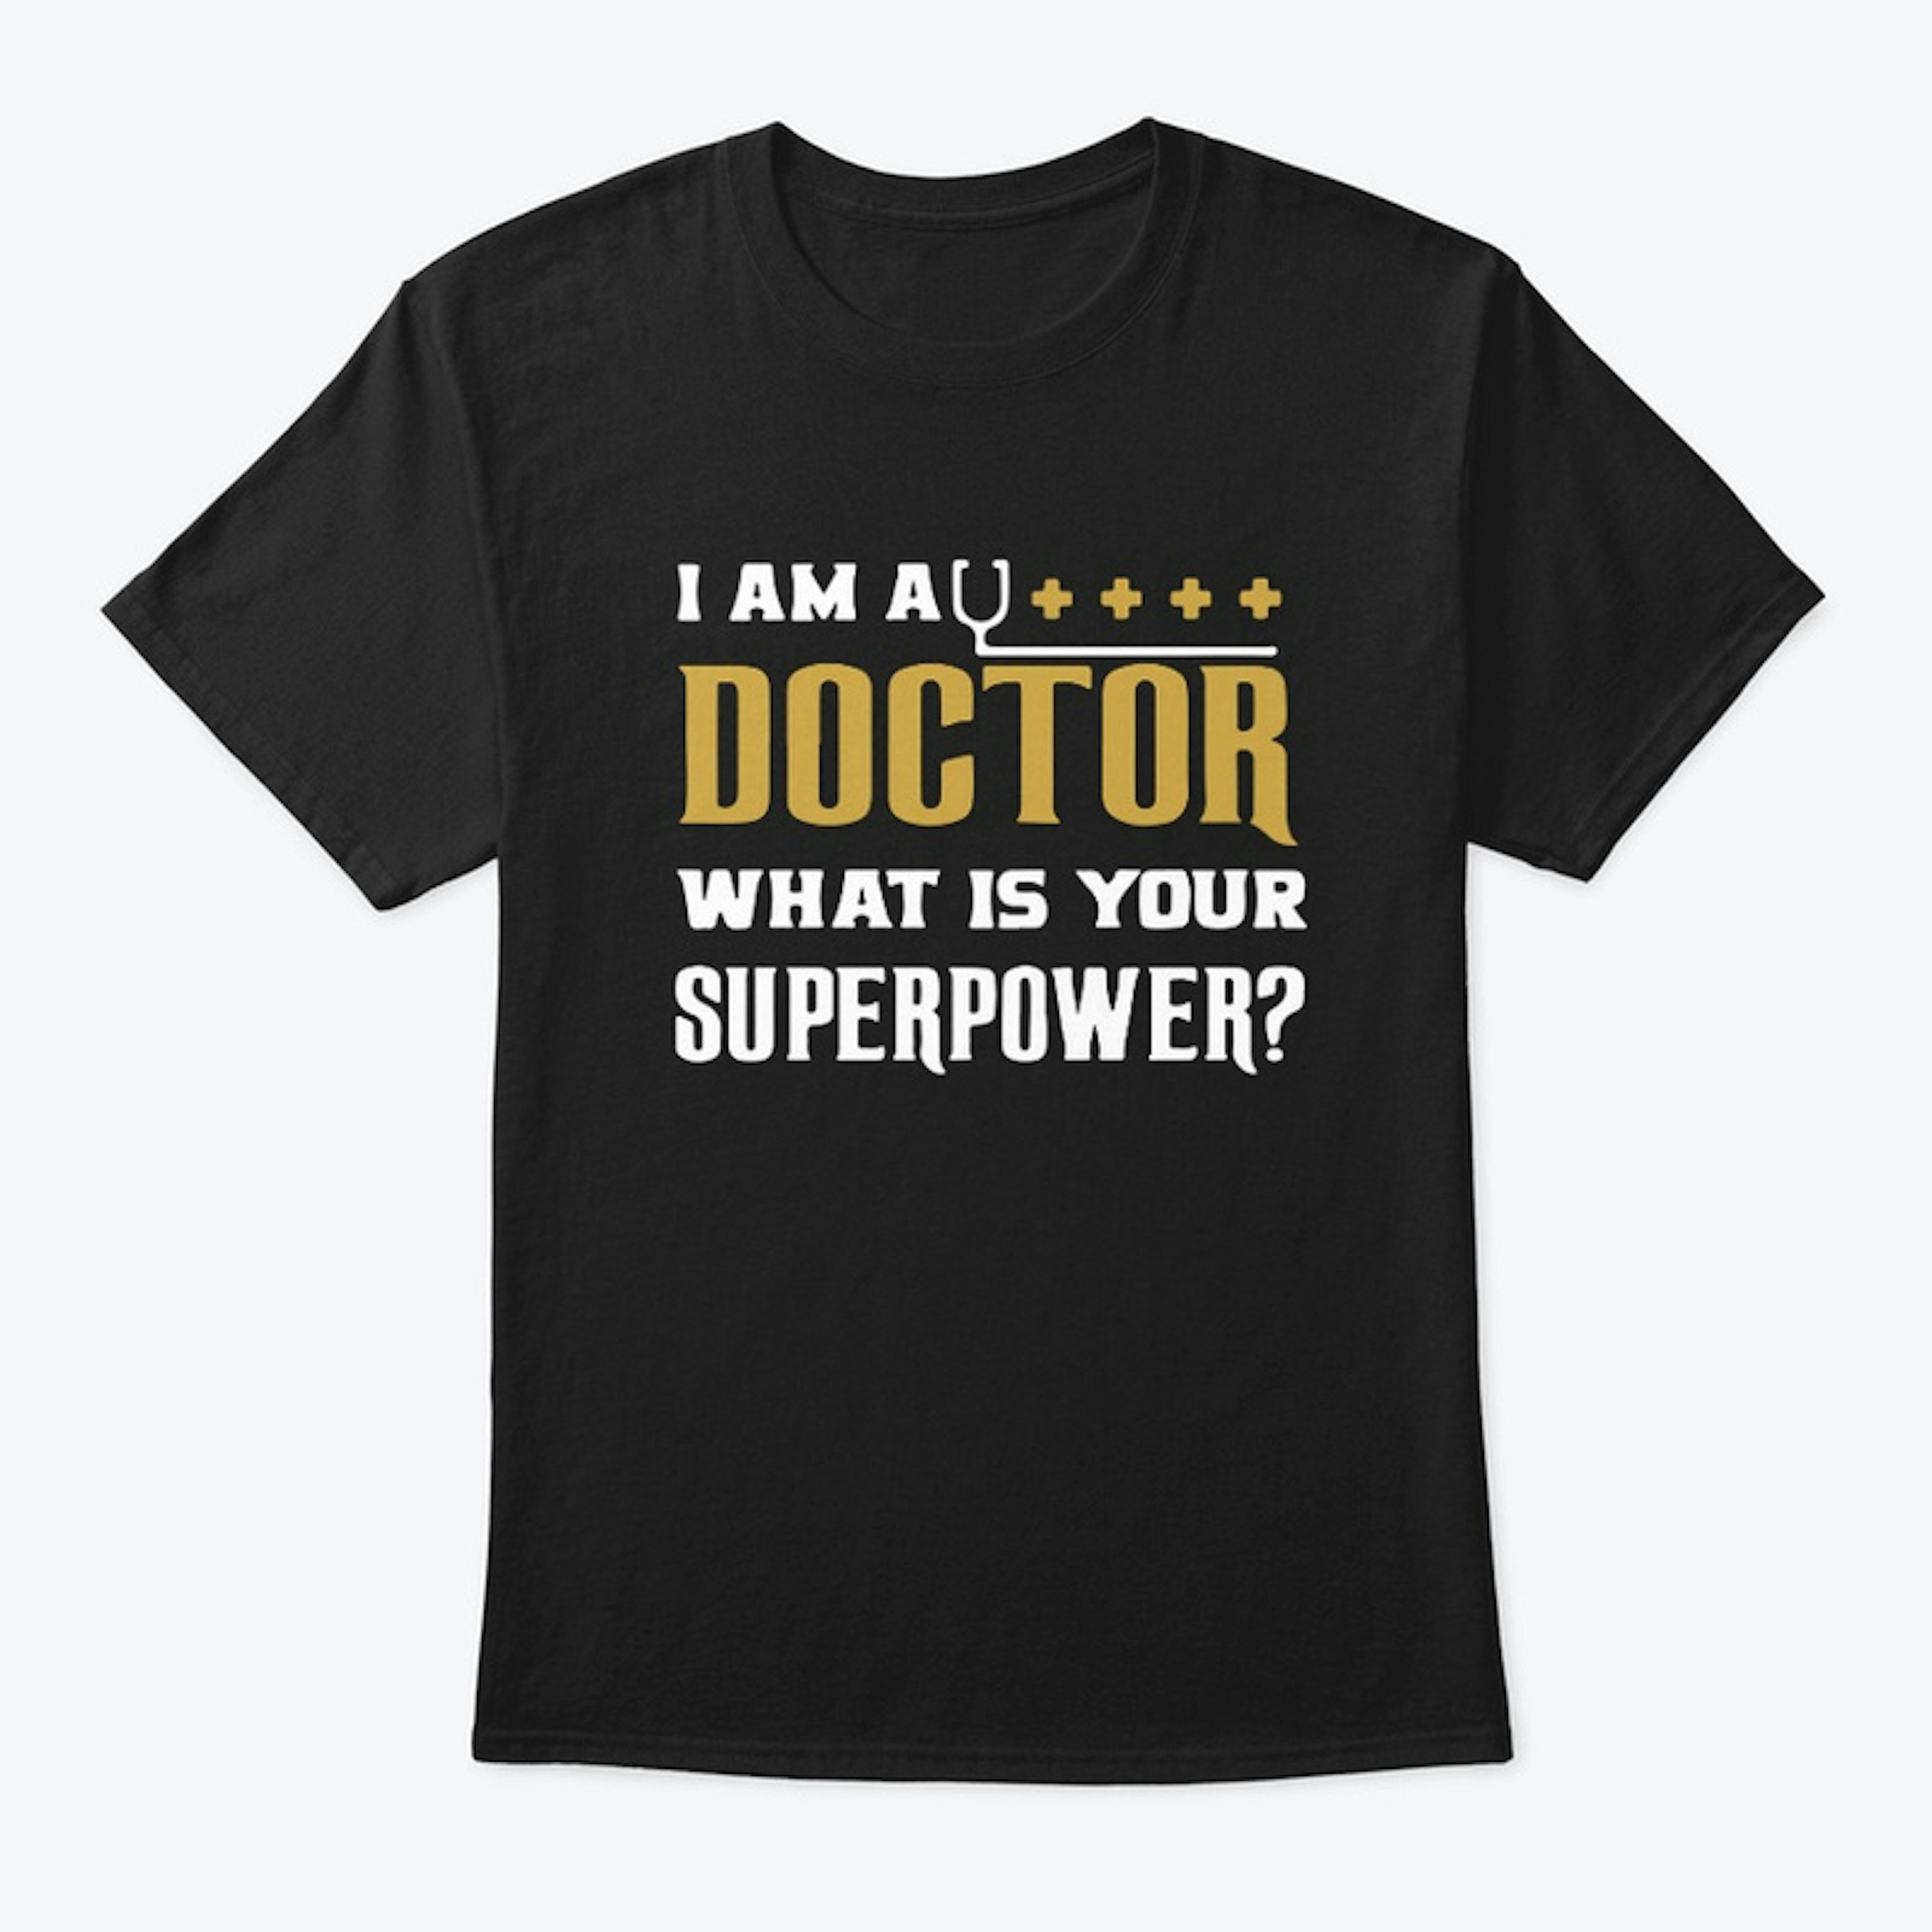 Physician Shirt